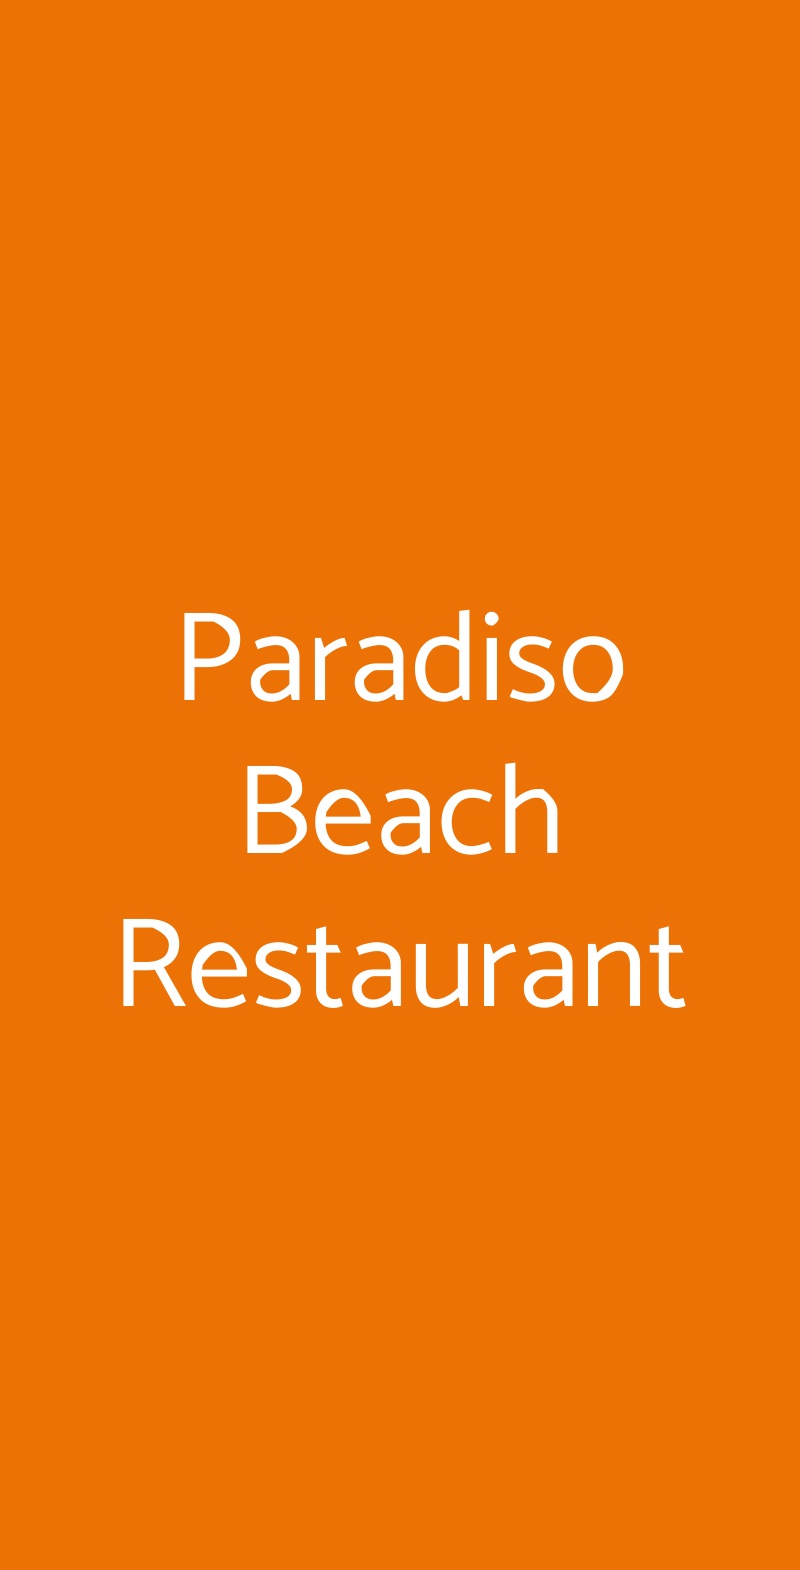 Paradiso Beach Restaurant Ravenna menù 1 pagina